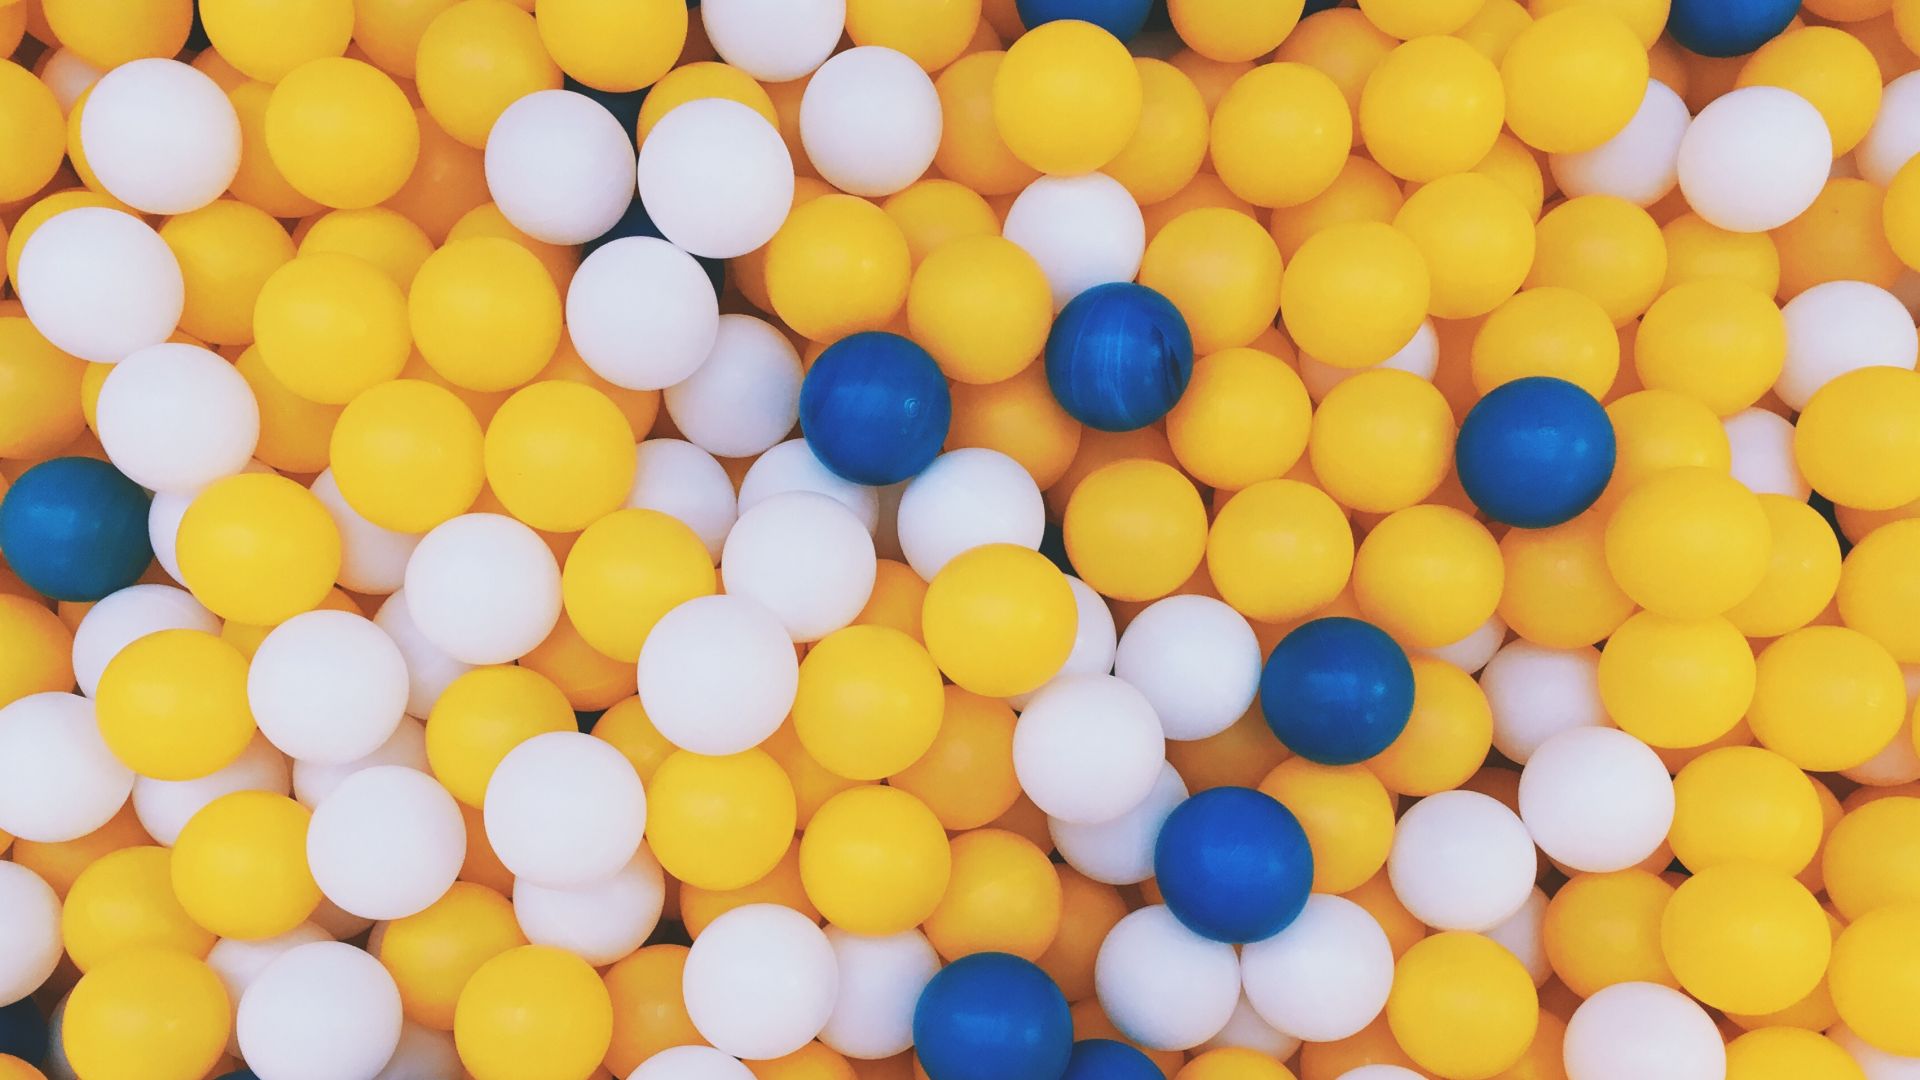 Wallpaper Balls, yellow blue and white balls, 4k